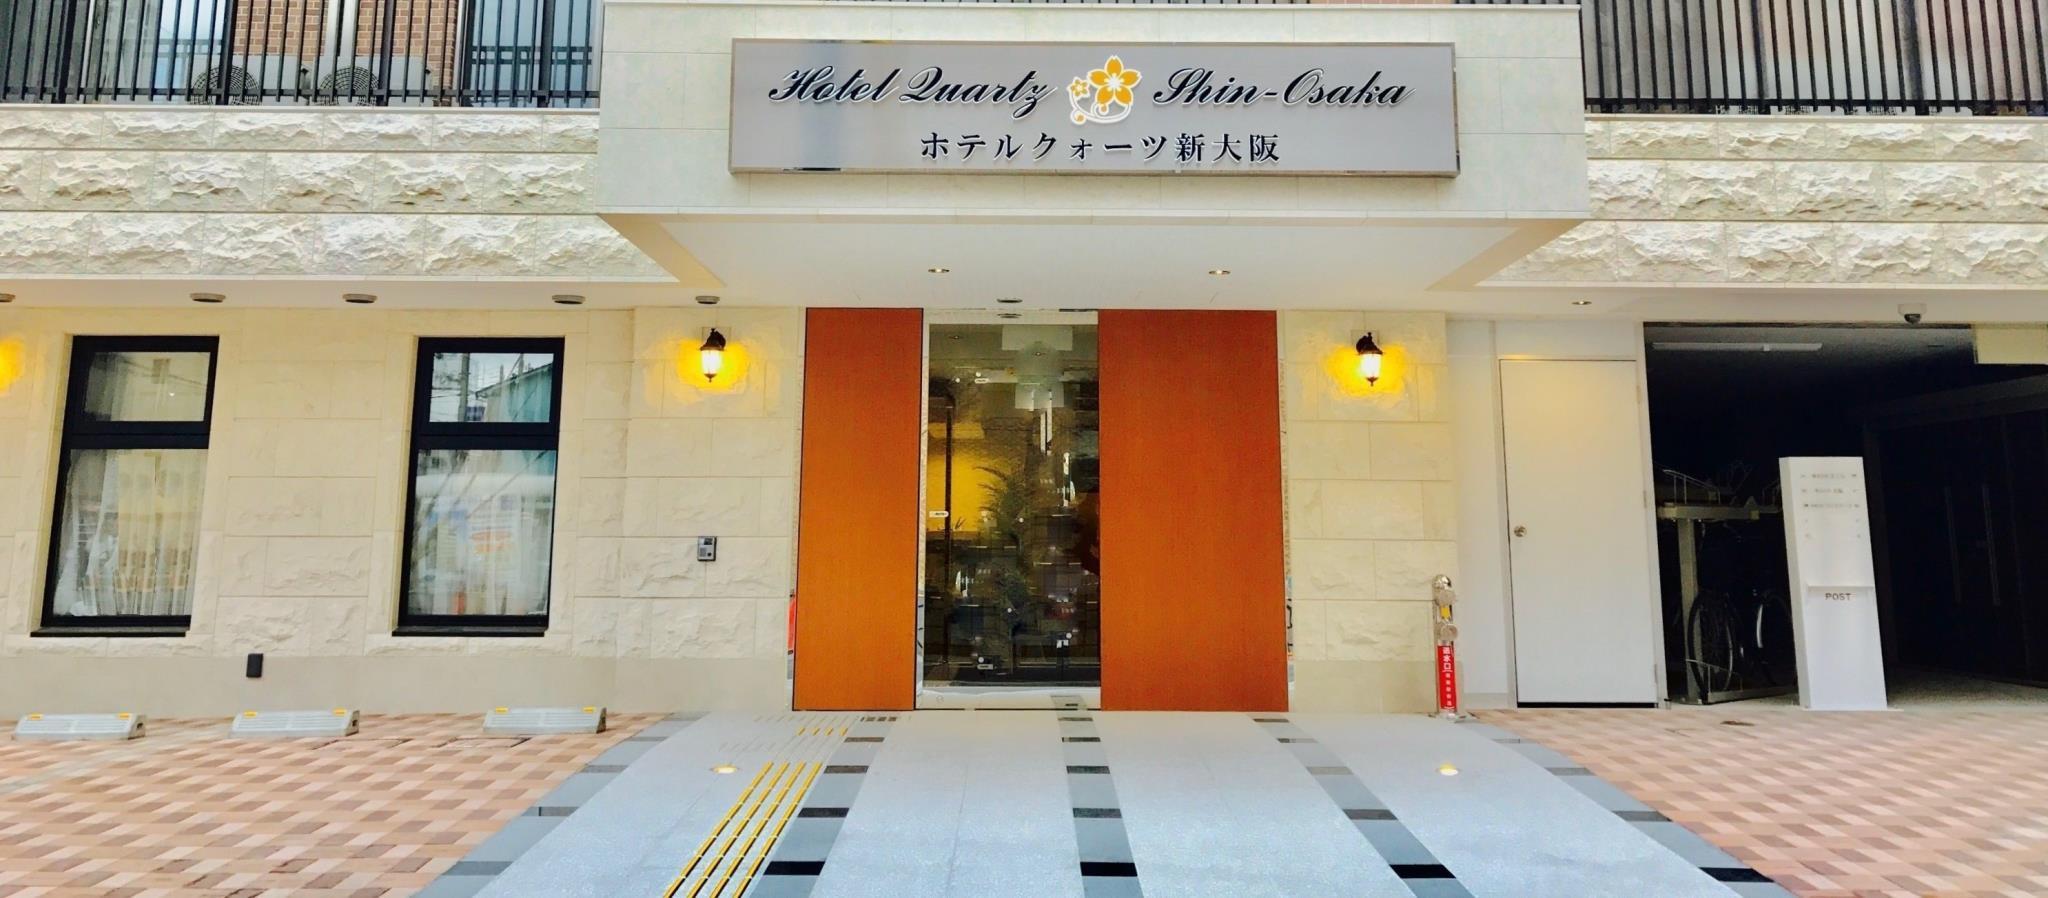 Hotel Quartz Shin-Osaka - Suita